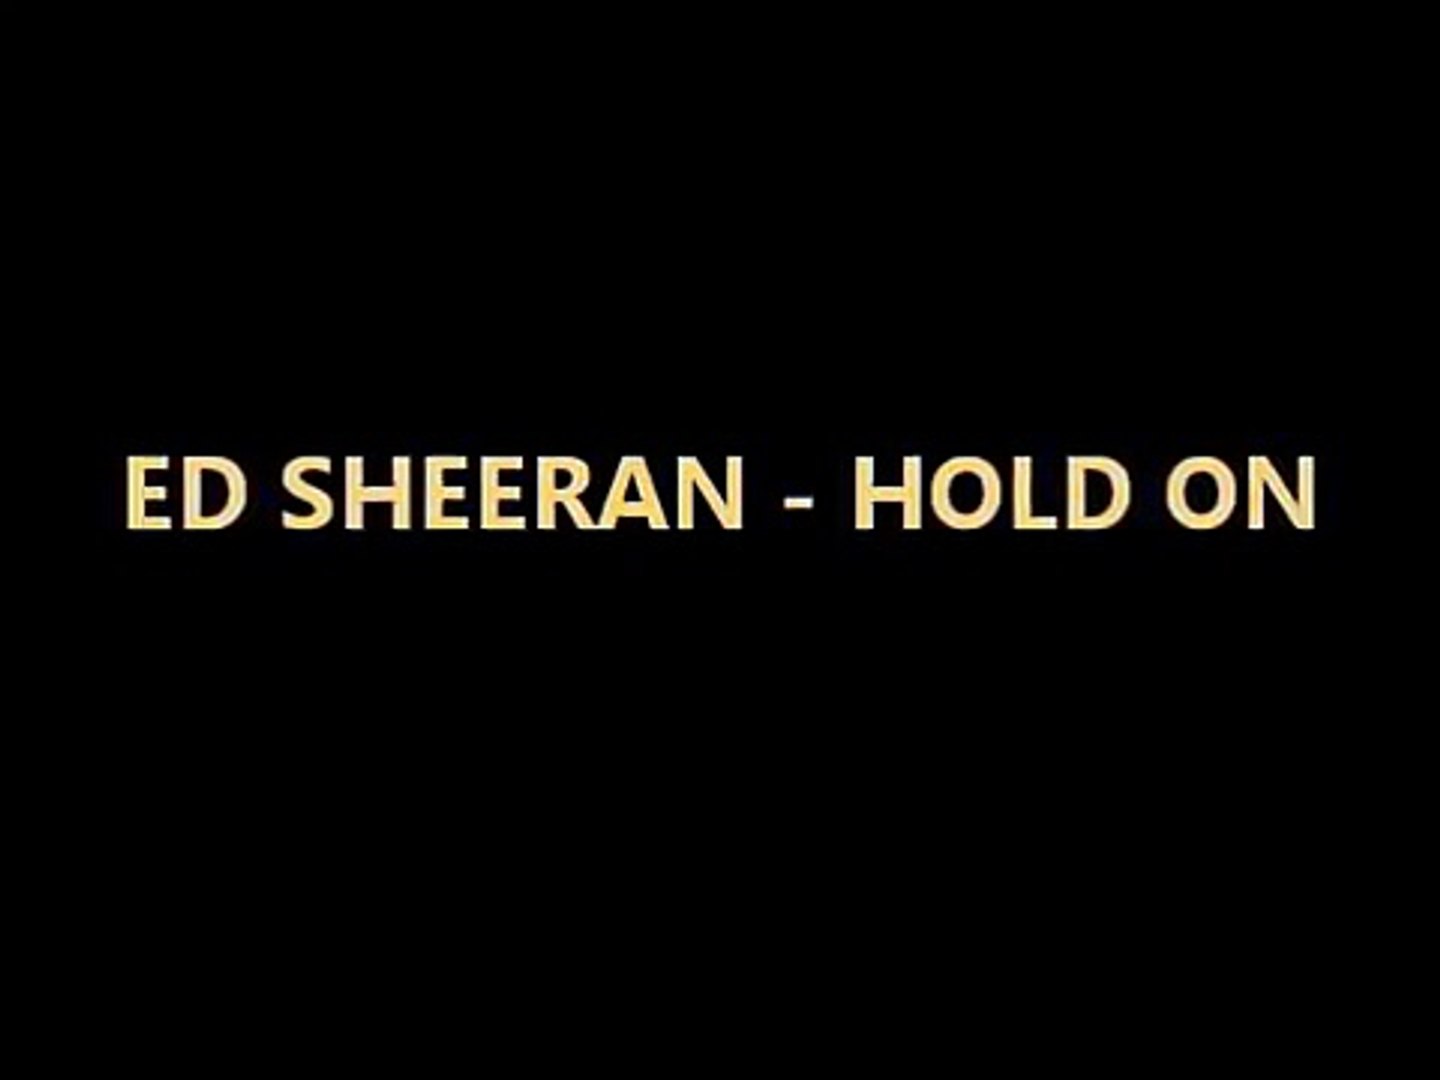 Ed Sheeran - Hold on New Song